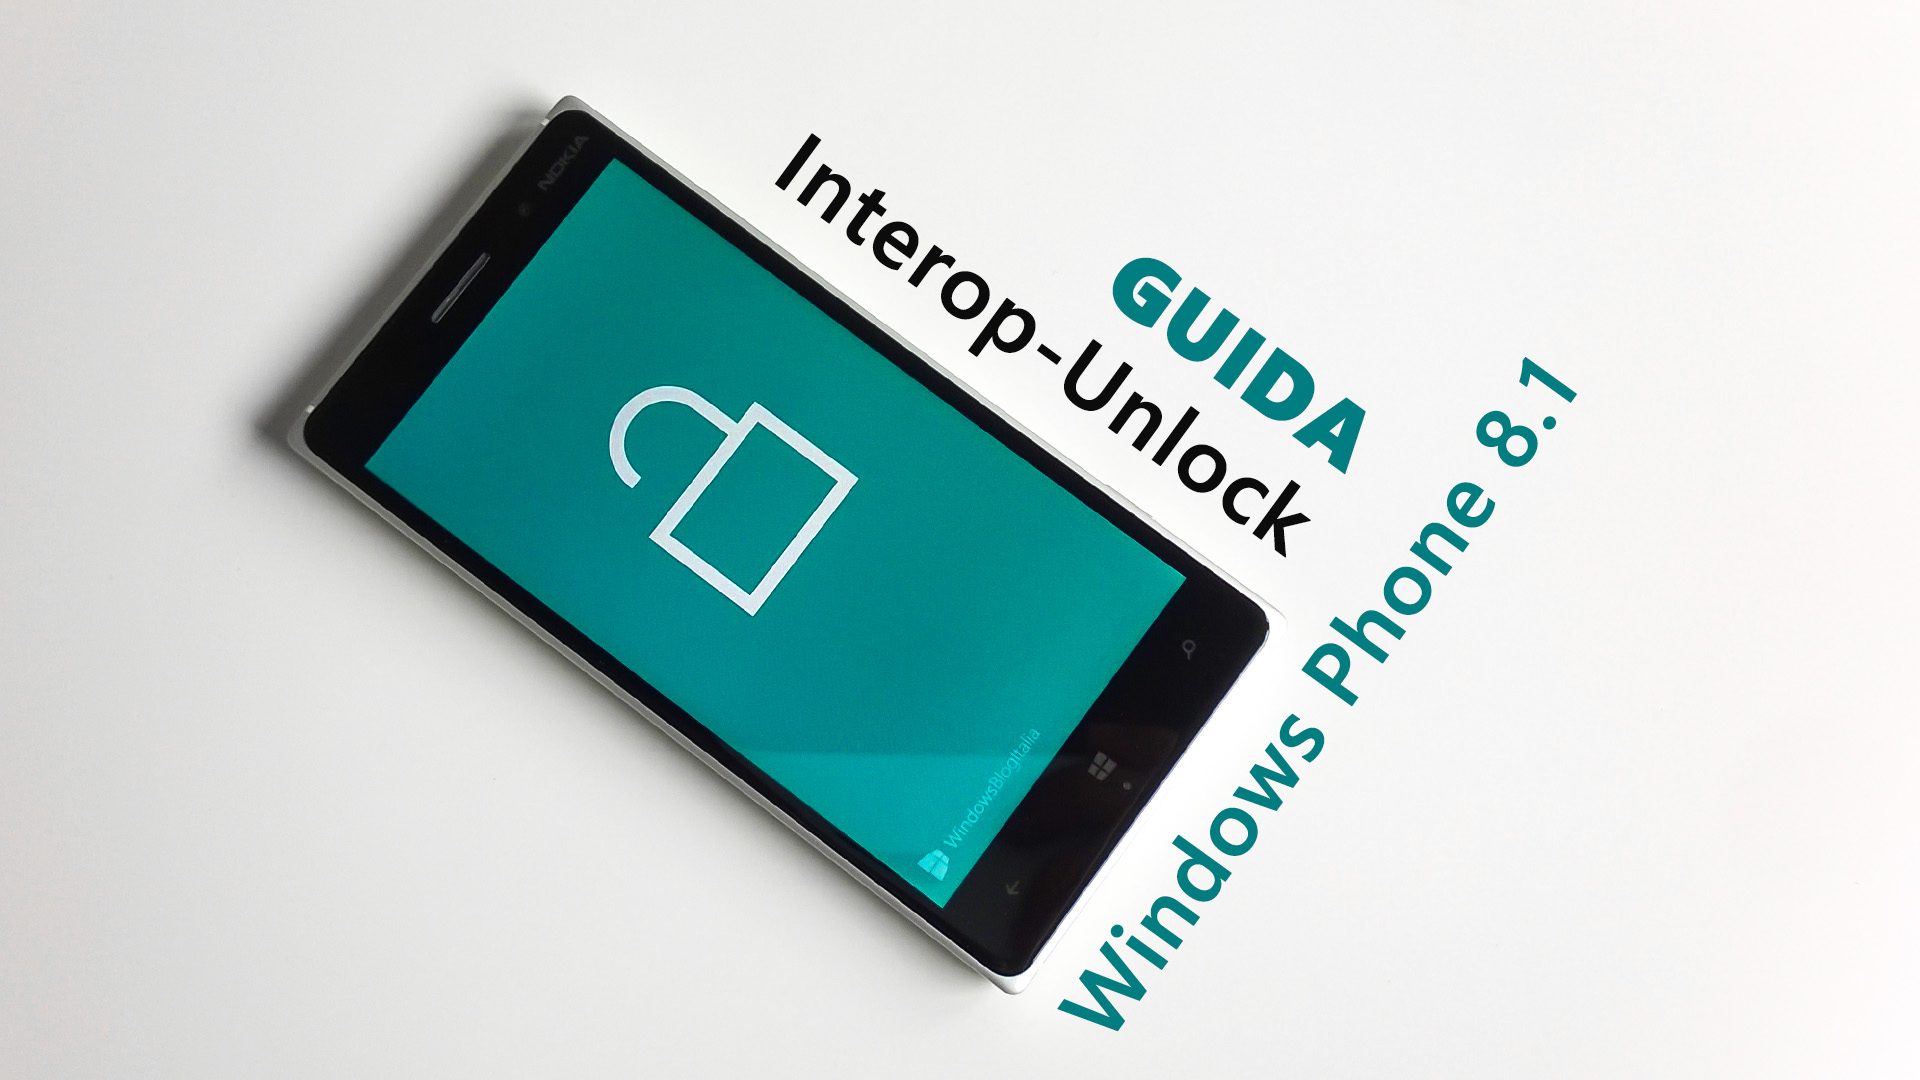 Interop-Unlock Windows Phone 8.1 Jailbreak